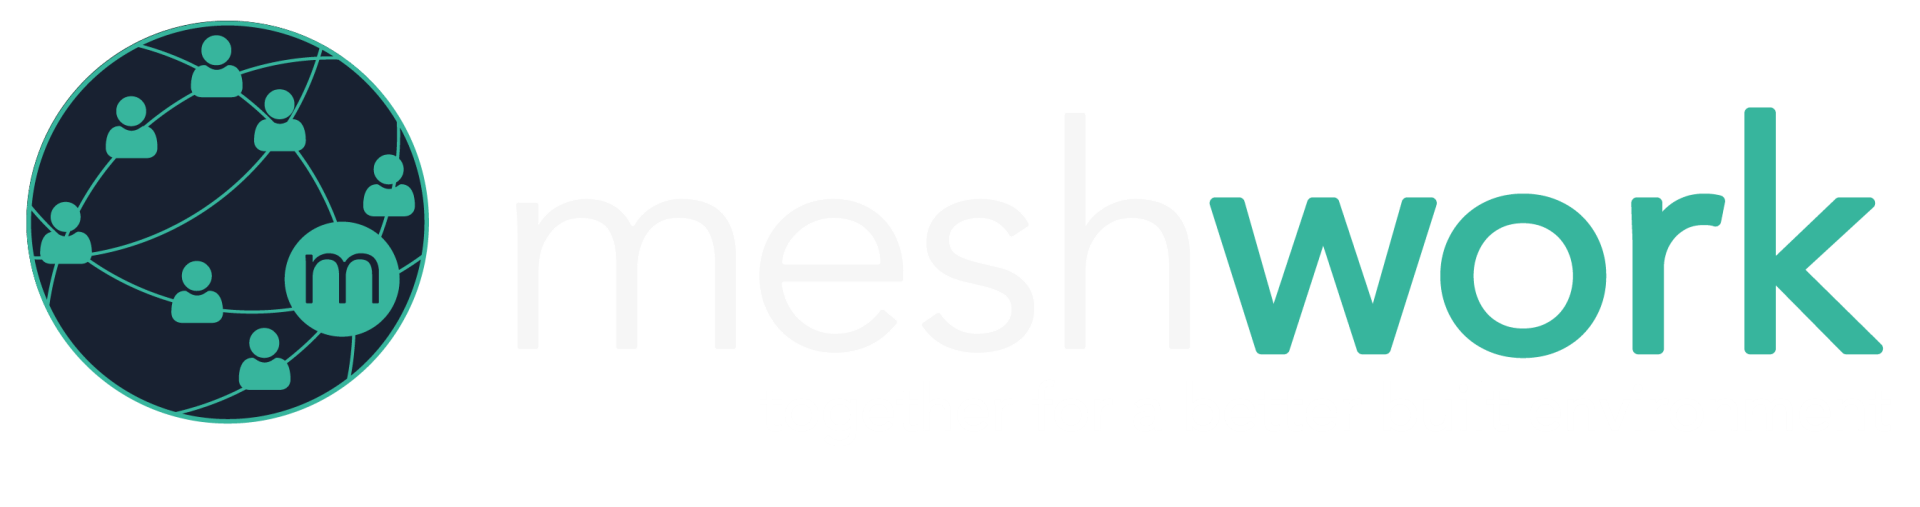 Meshwork logo